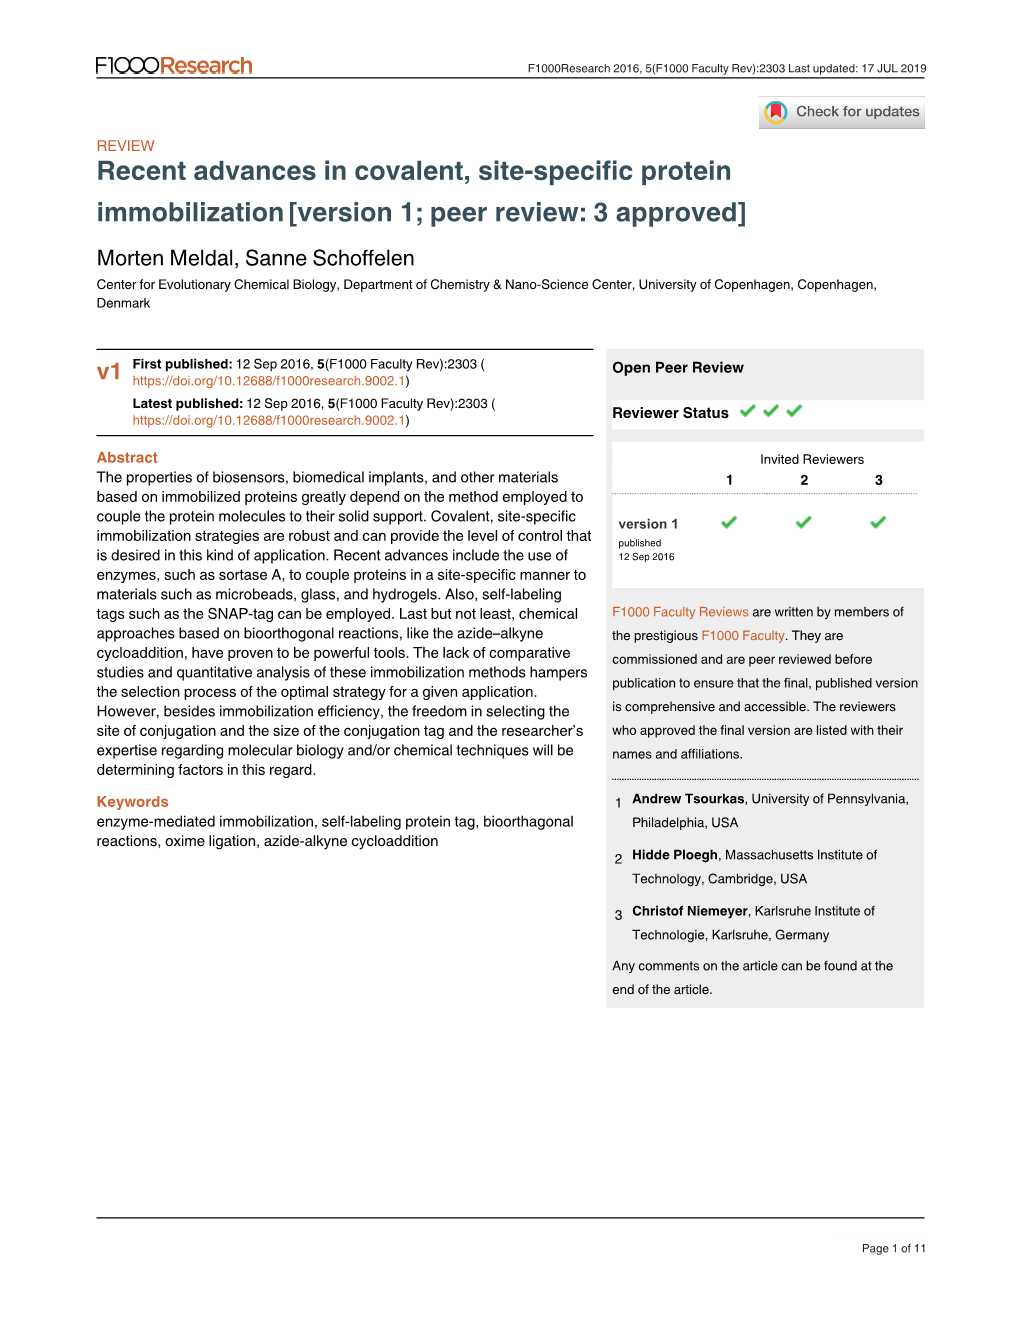 Recent Advances in Covalent, Site-Specific Protein Immobilization